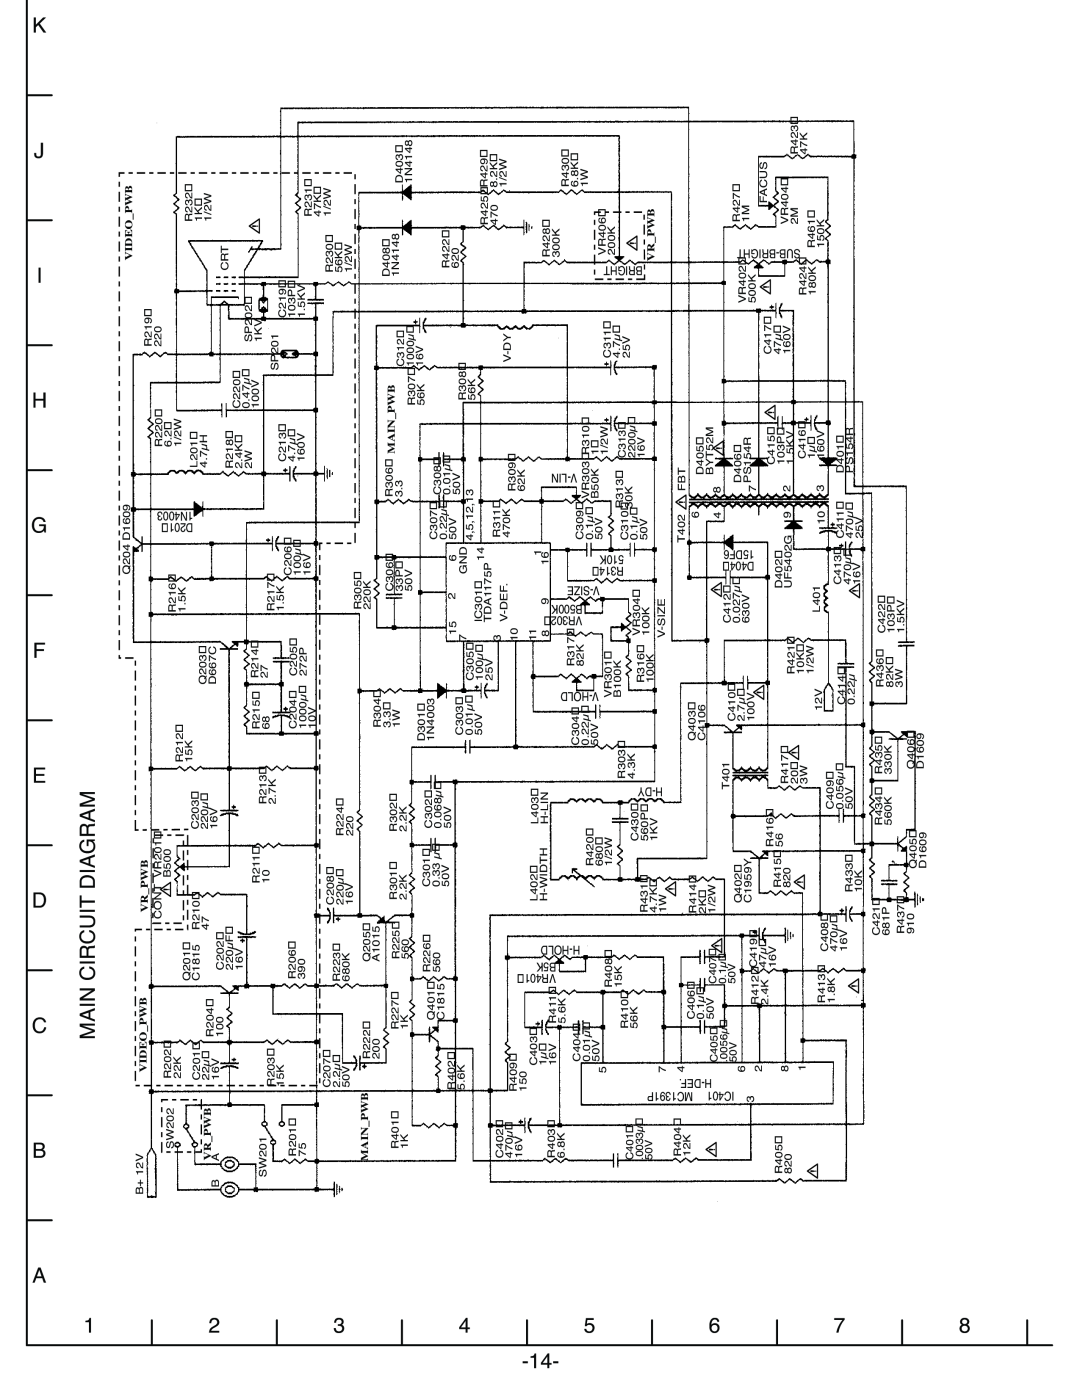 Sanyo VM-6614, VM-6615P specifications K J I, H G F E, Diagram, Circuit, Main, Videopwb, Vr Pwb, Vrpwb A 